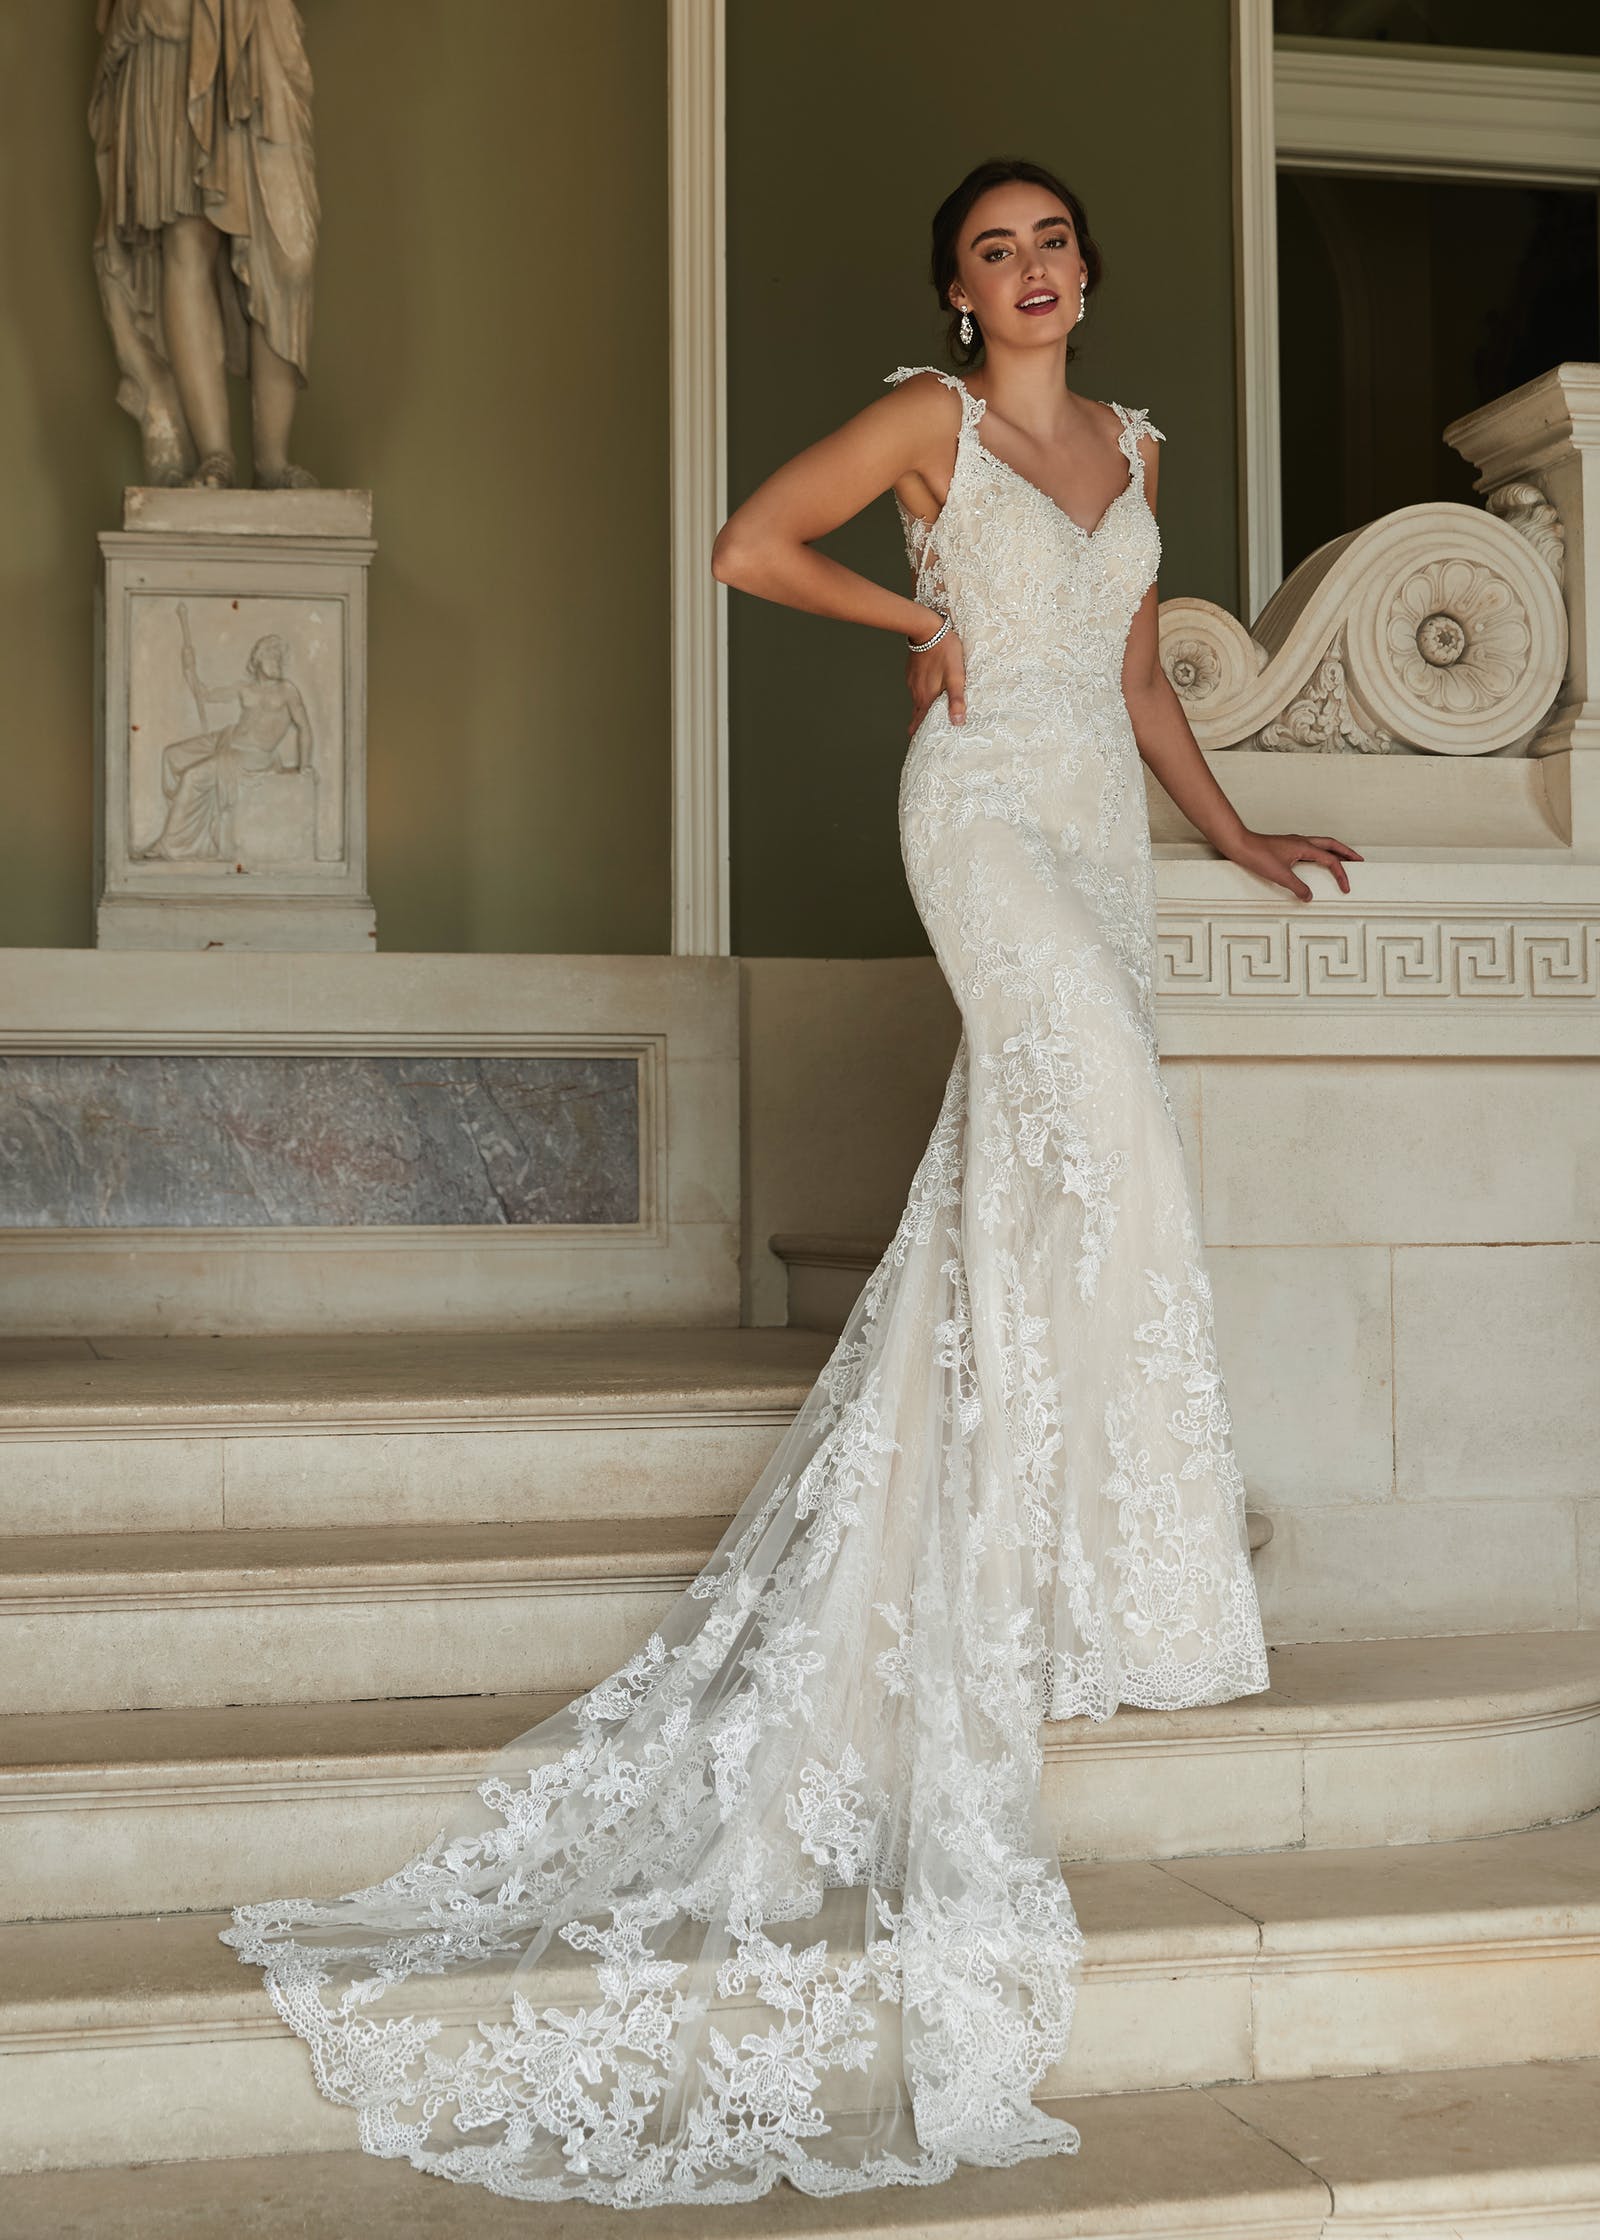 Tiffany wedding dress by Romantica